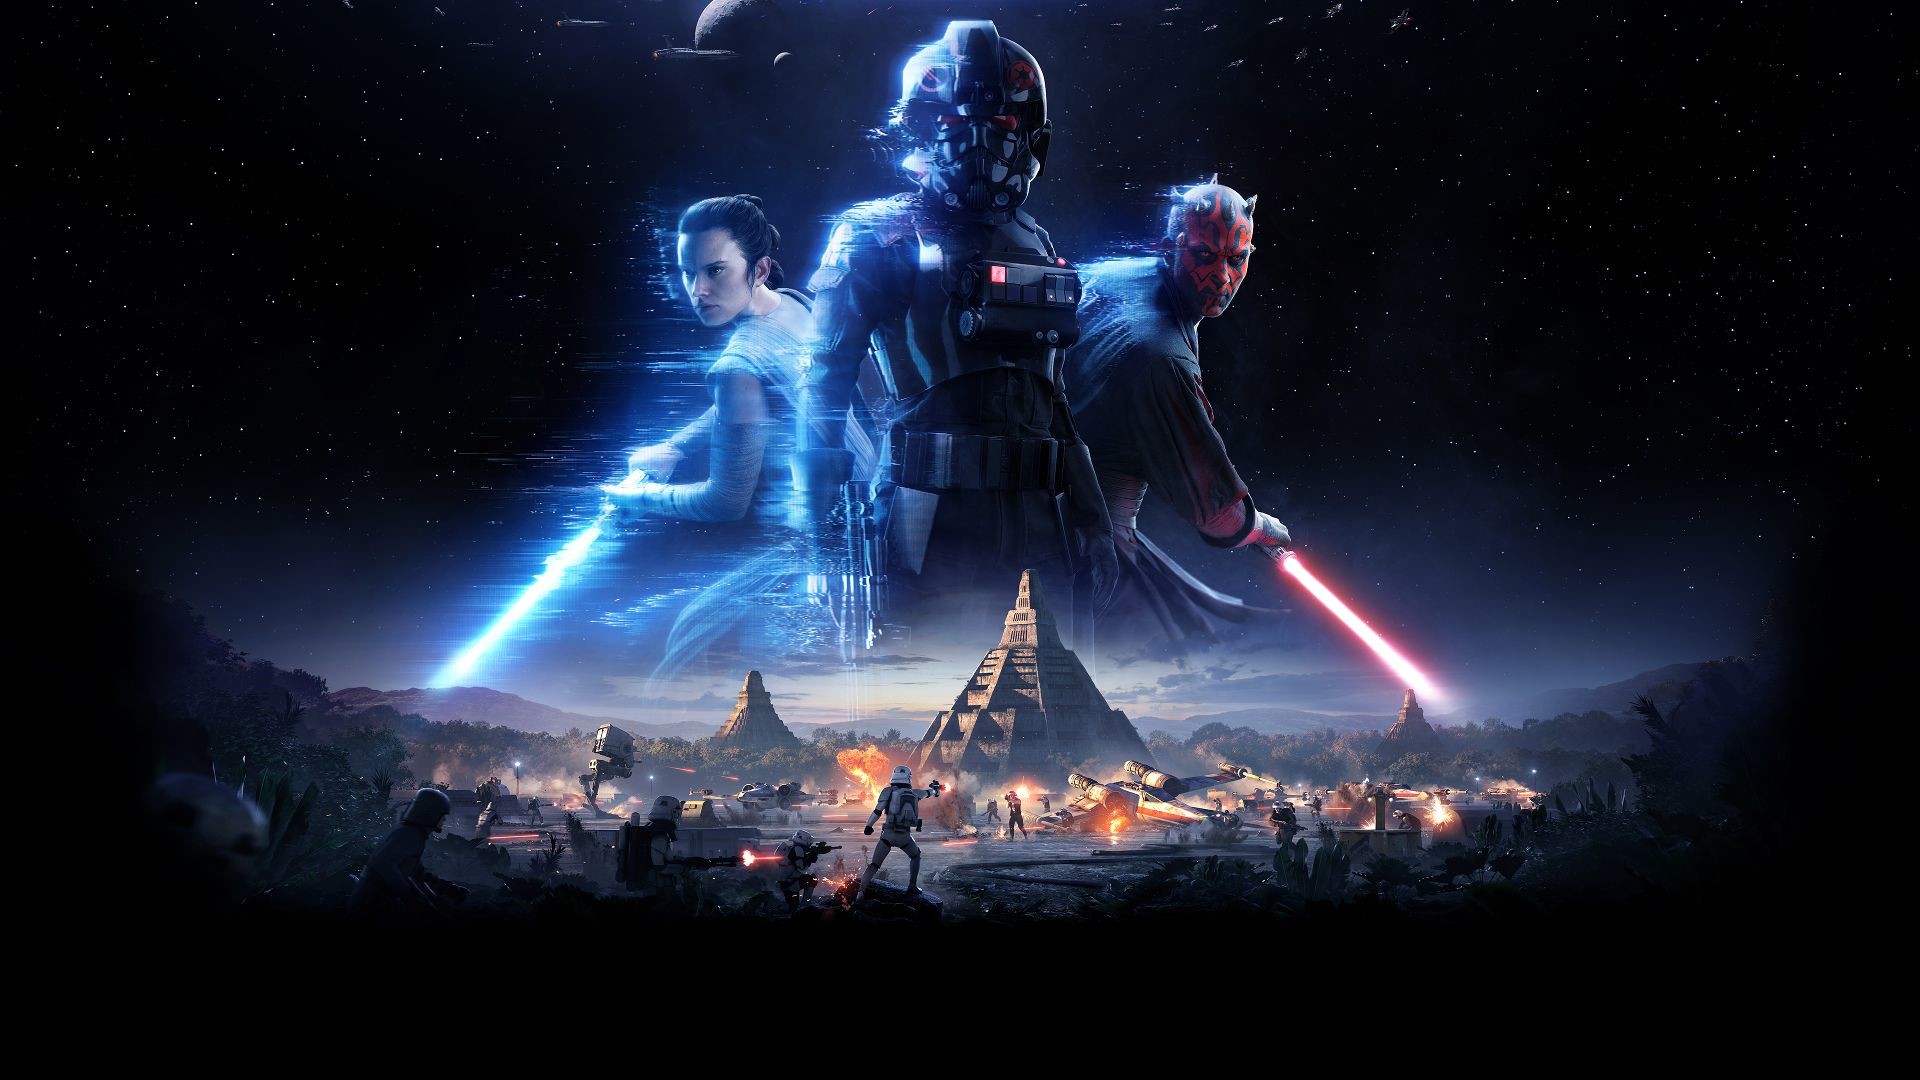 1920x1080 Video Game - Star Wars Battlefront II (2017) Star Wars Sci Fi Futuristic  Imperial